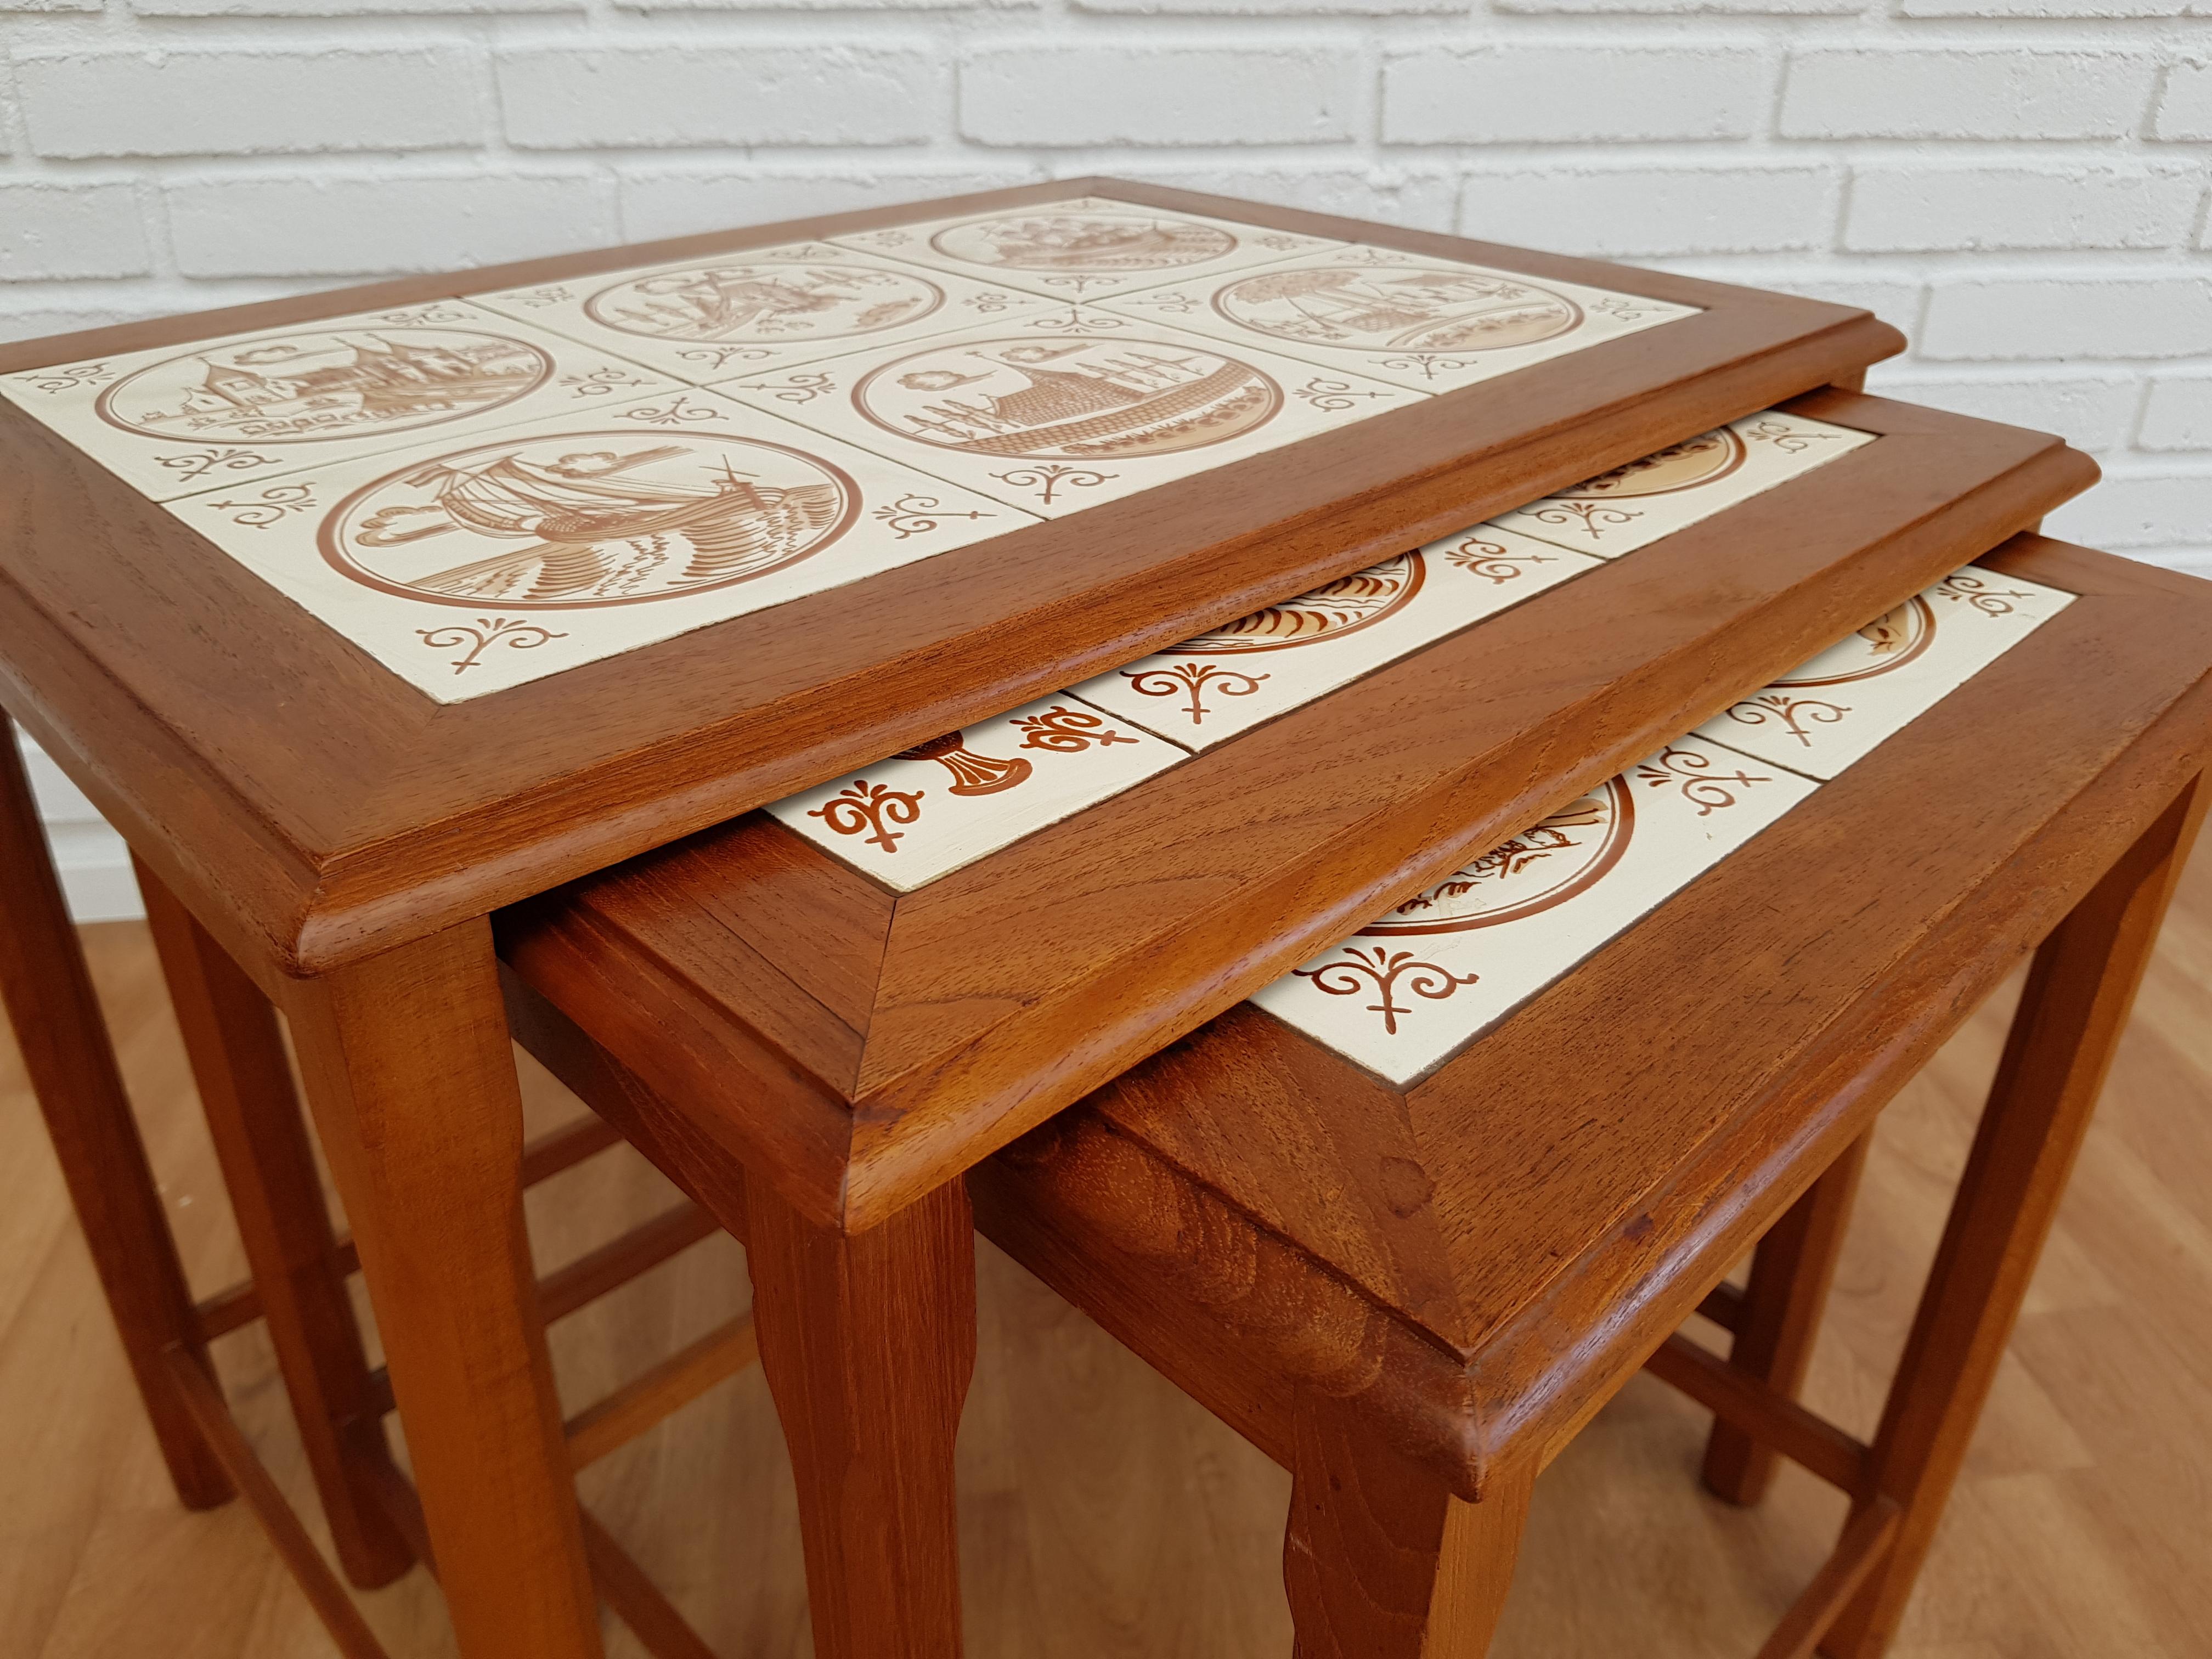 Mid-20th Century Nesting Table, Danish Design, Hand Painted Ceramic Tiles, Teak Wood, 1960s For Sale